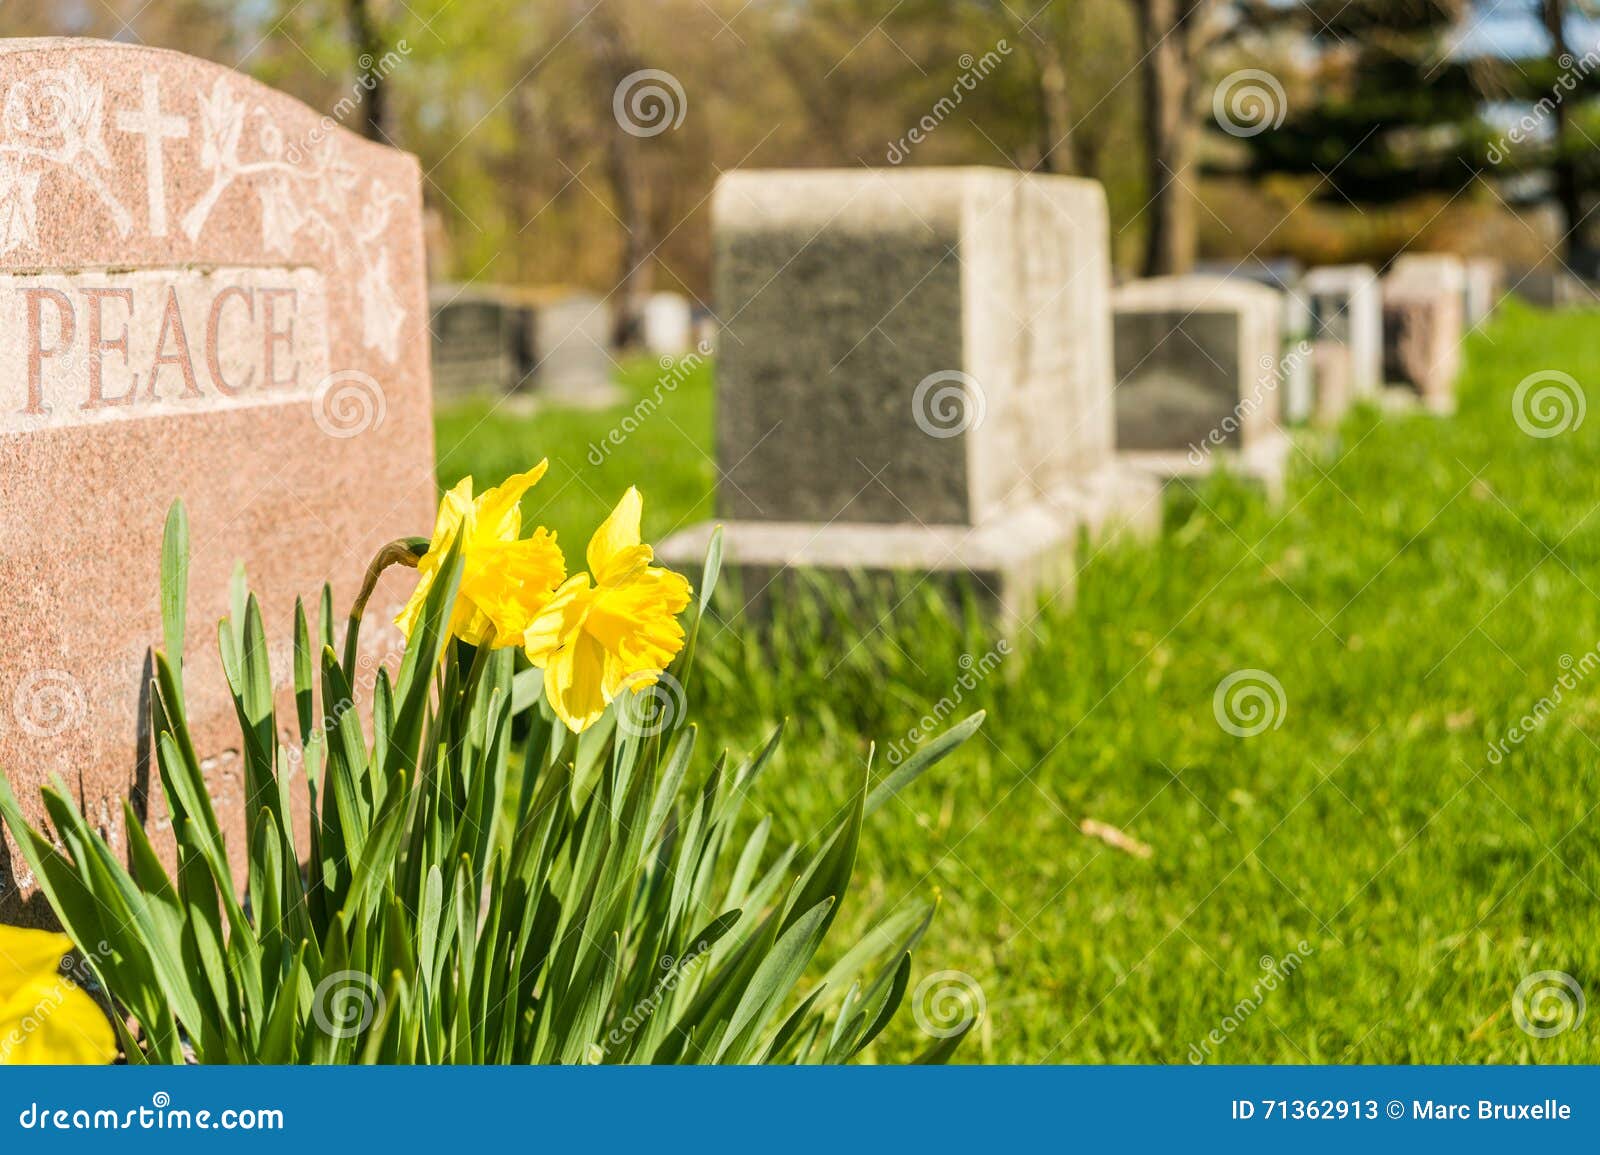 tombstones in montreal cemetery